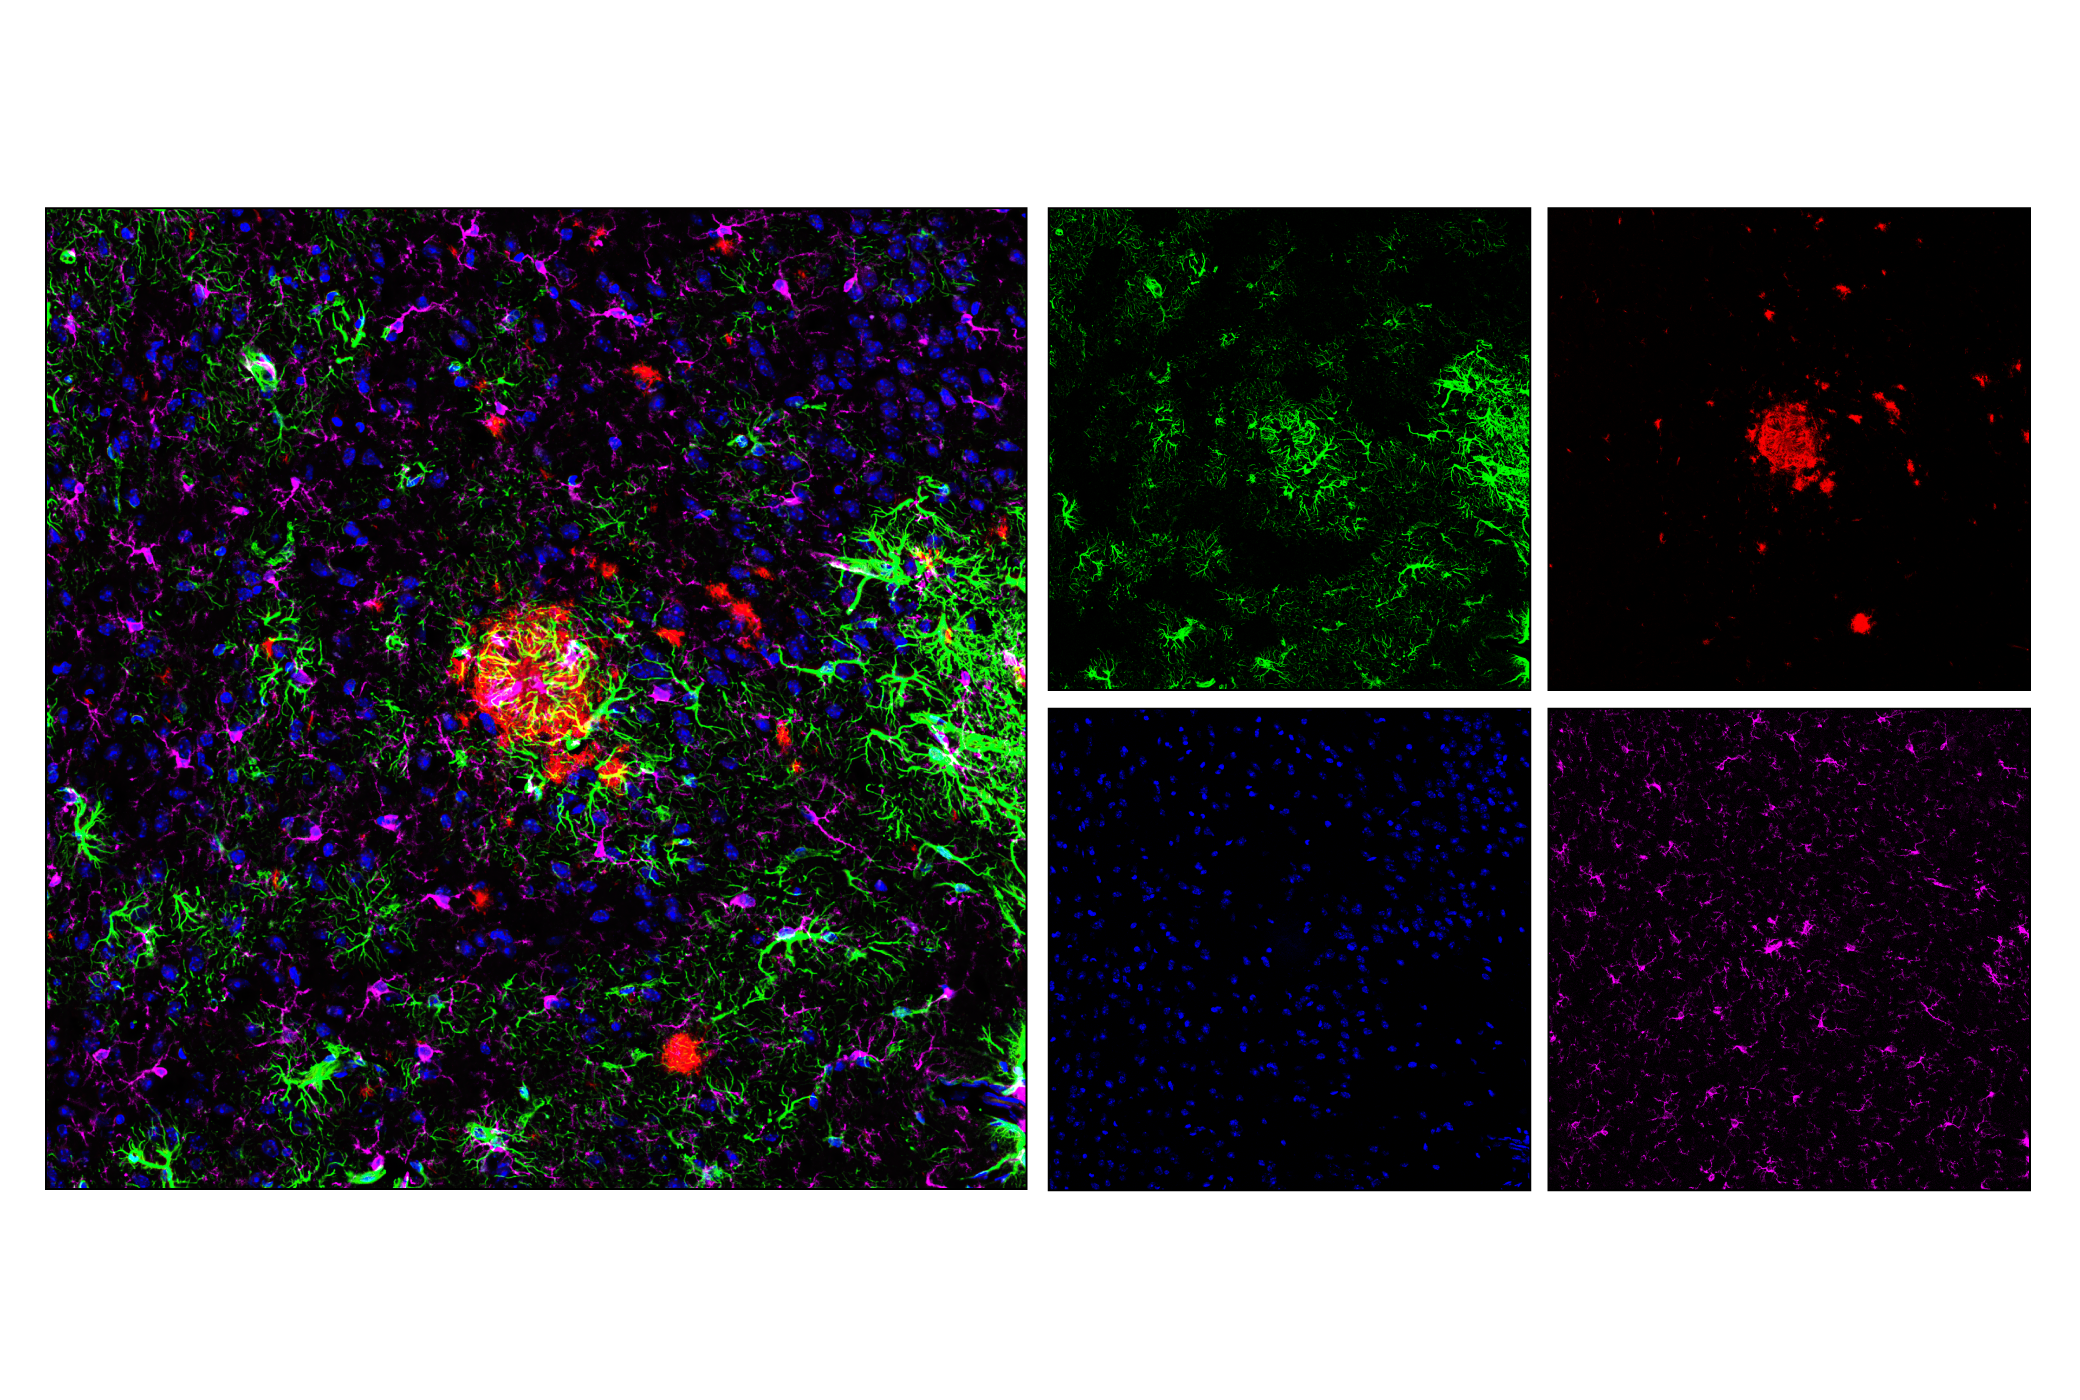  Image 29: β-Amyloid Mouse Model Neuronal Viability IF Antibody Sampler Kit